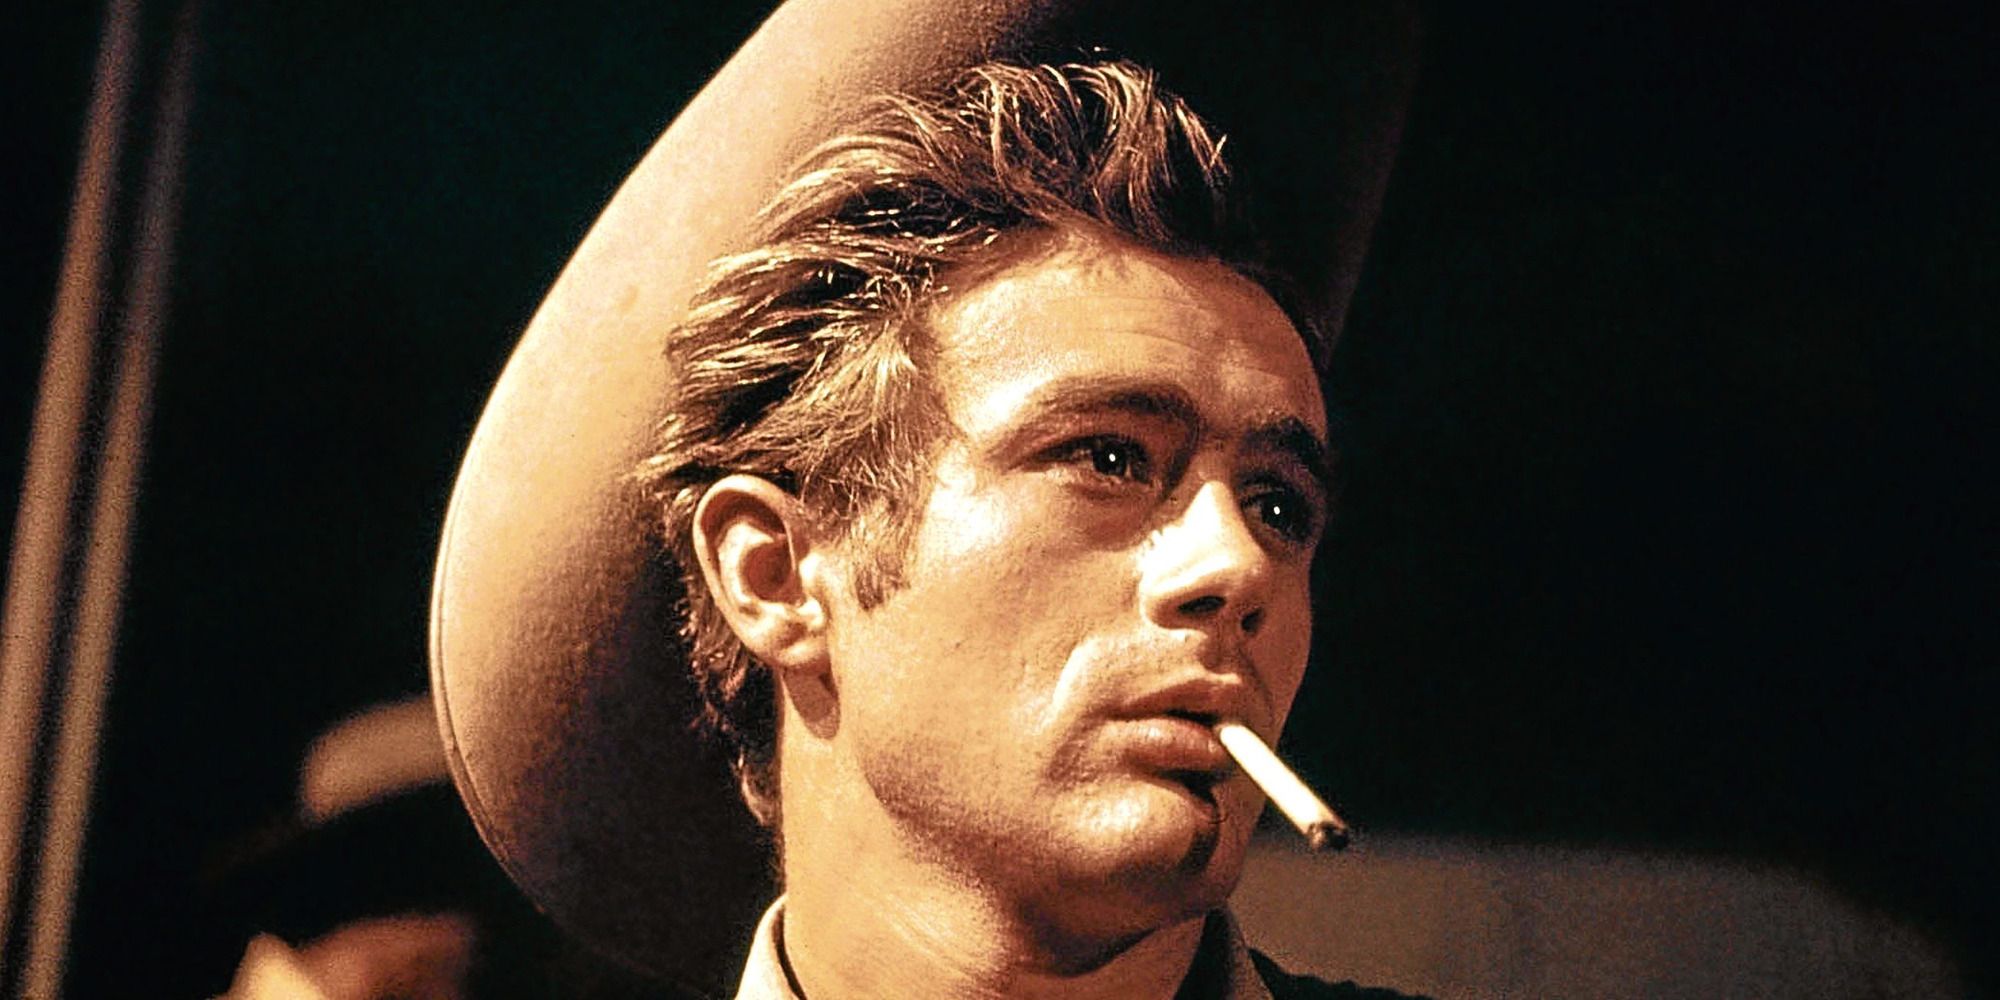 James Dean in a cowboy hat smoking a cigarette